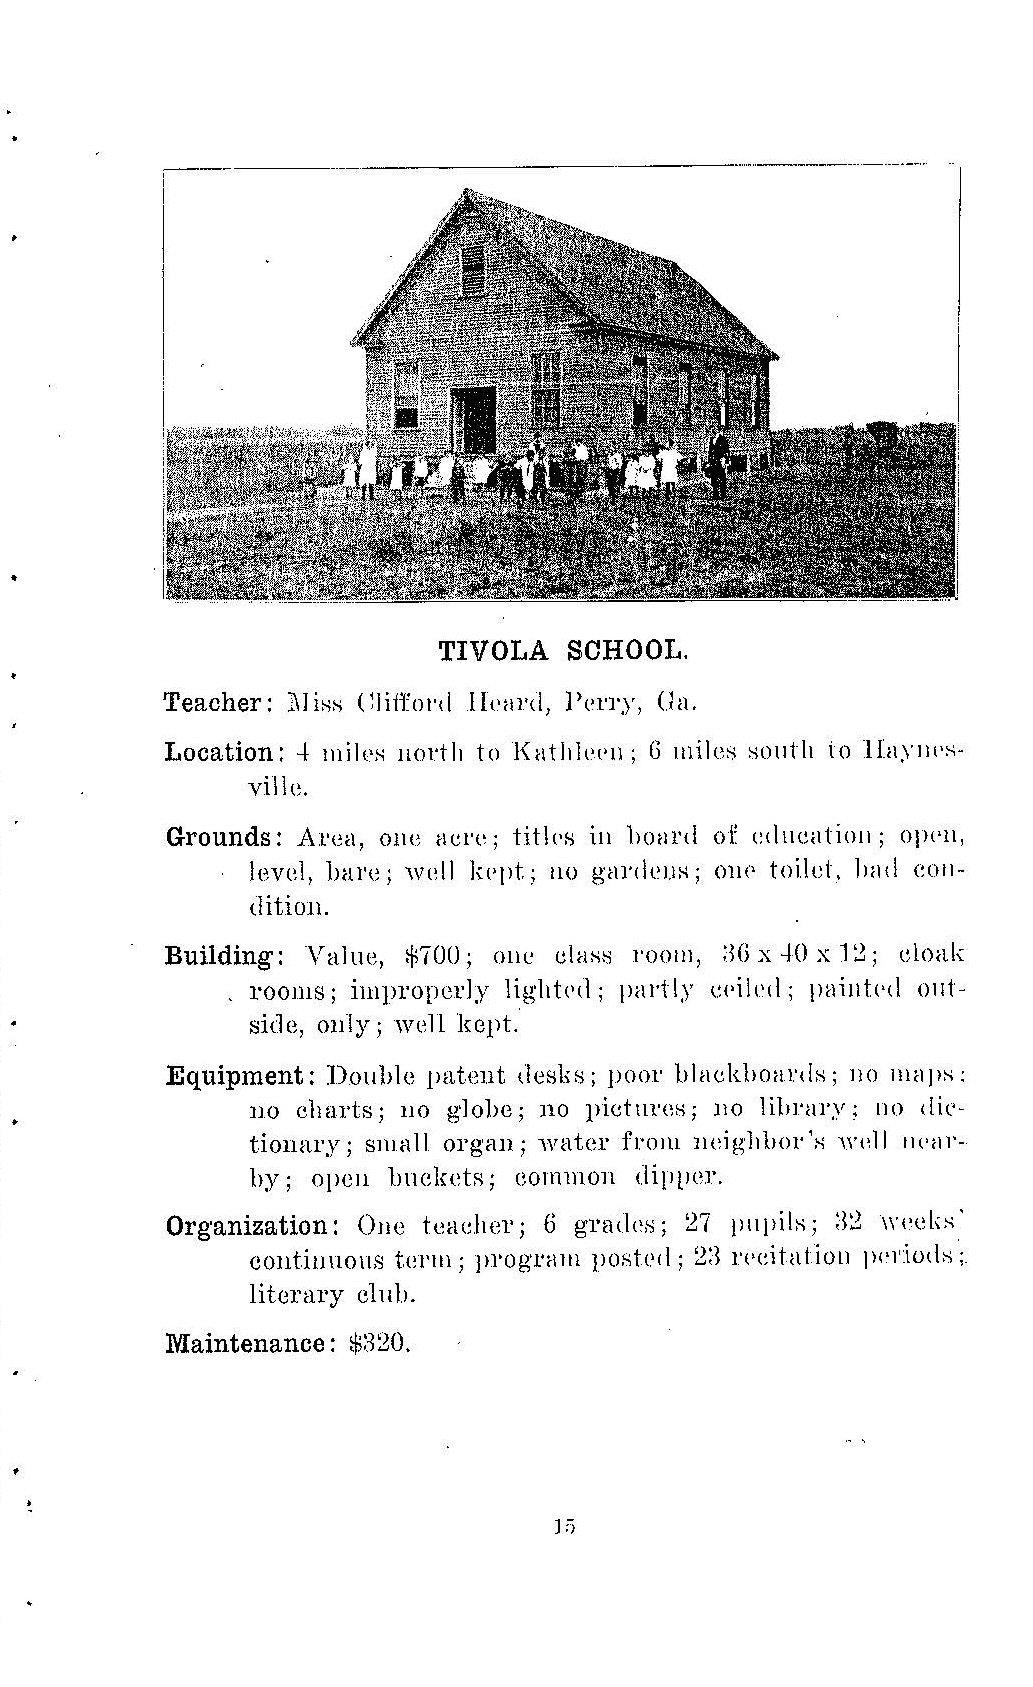 Tivola School